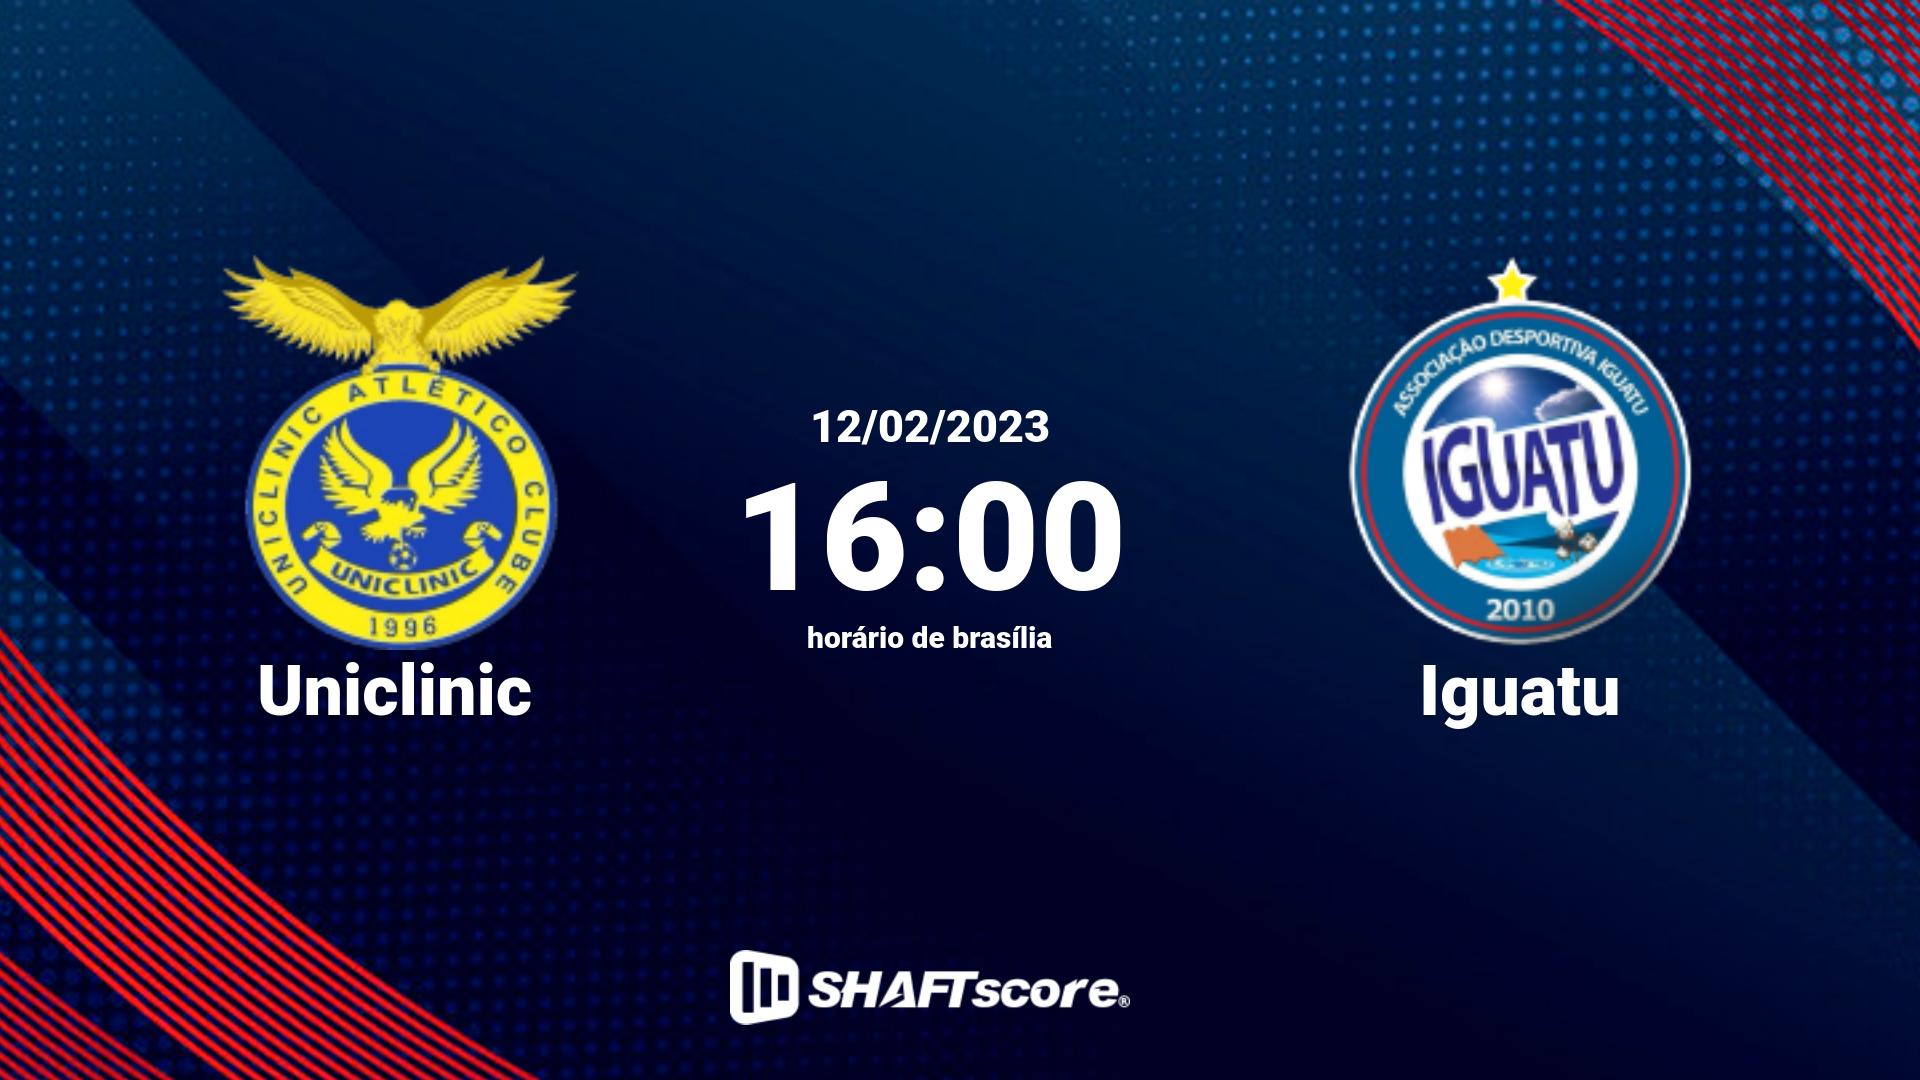 Estatísticas do jogo Uniclinic vs Iguatu 12.02 16:00